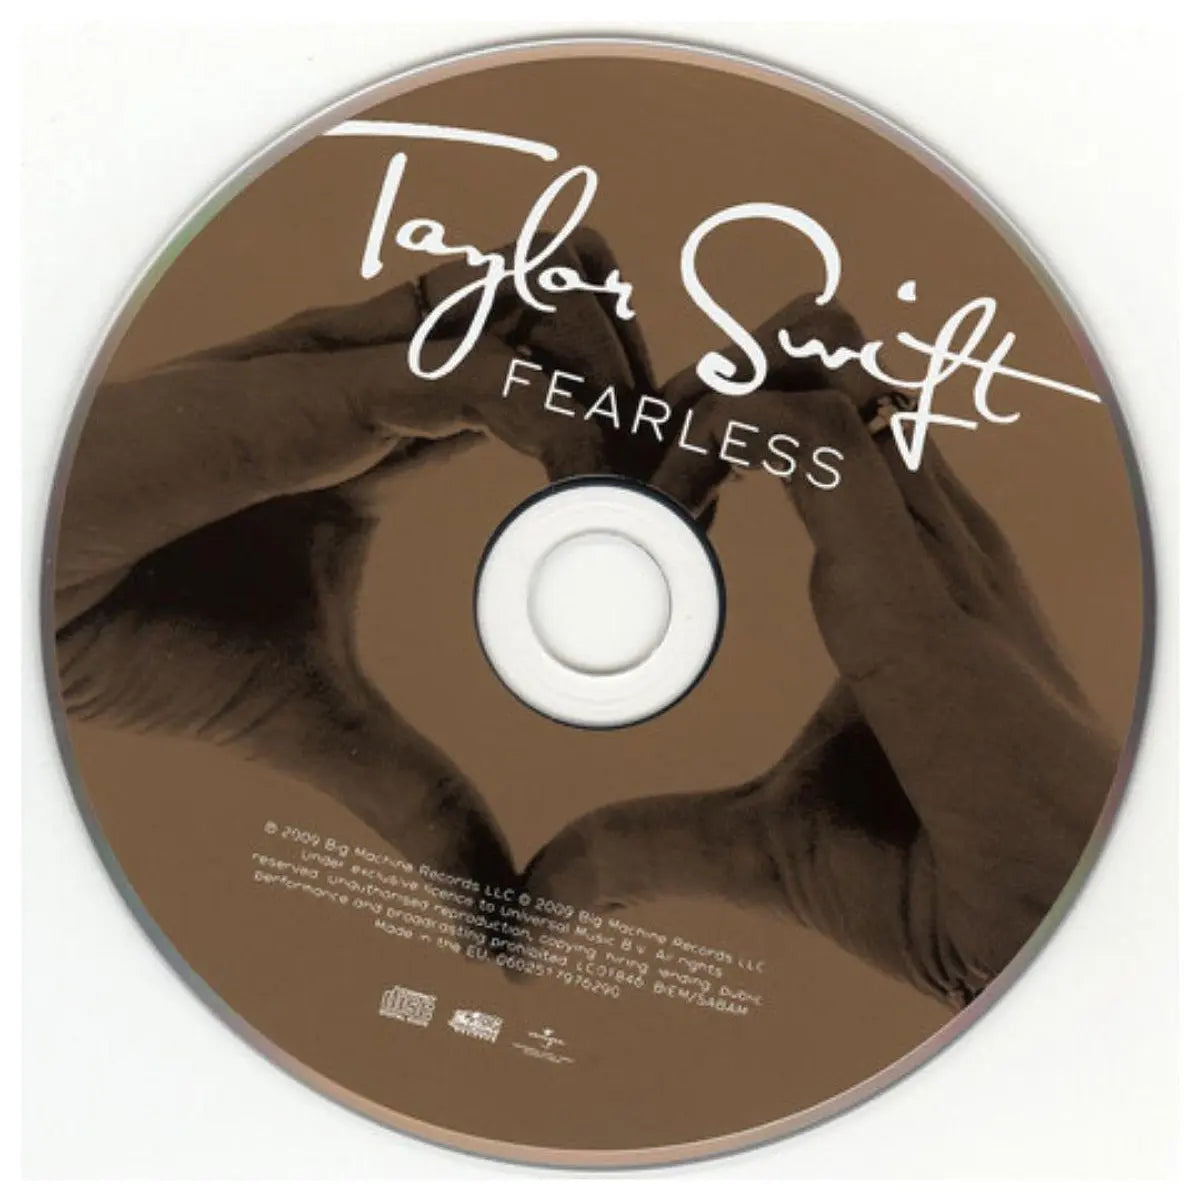 Taylor Swift - Fearless (2009 Edition) CD - Black Vinyl Records Spain